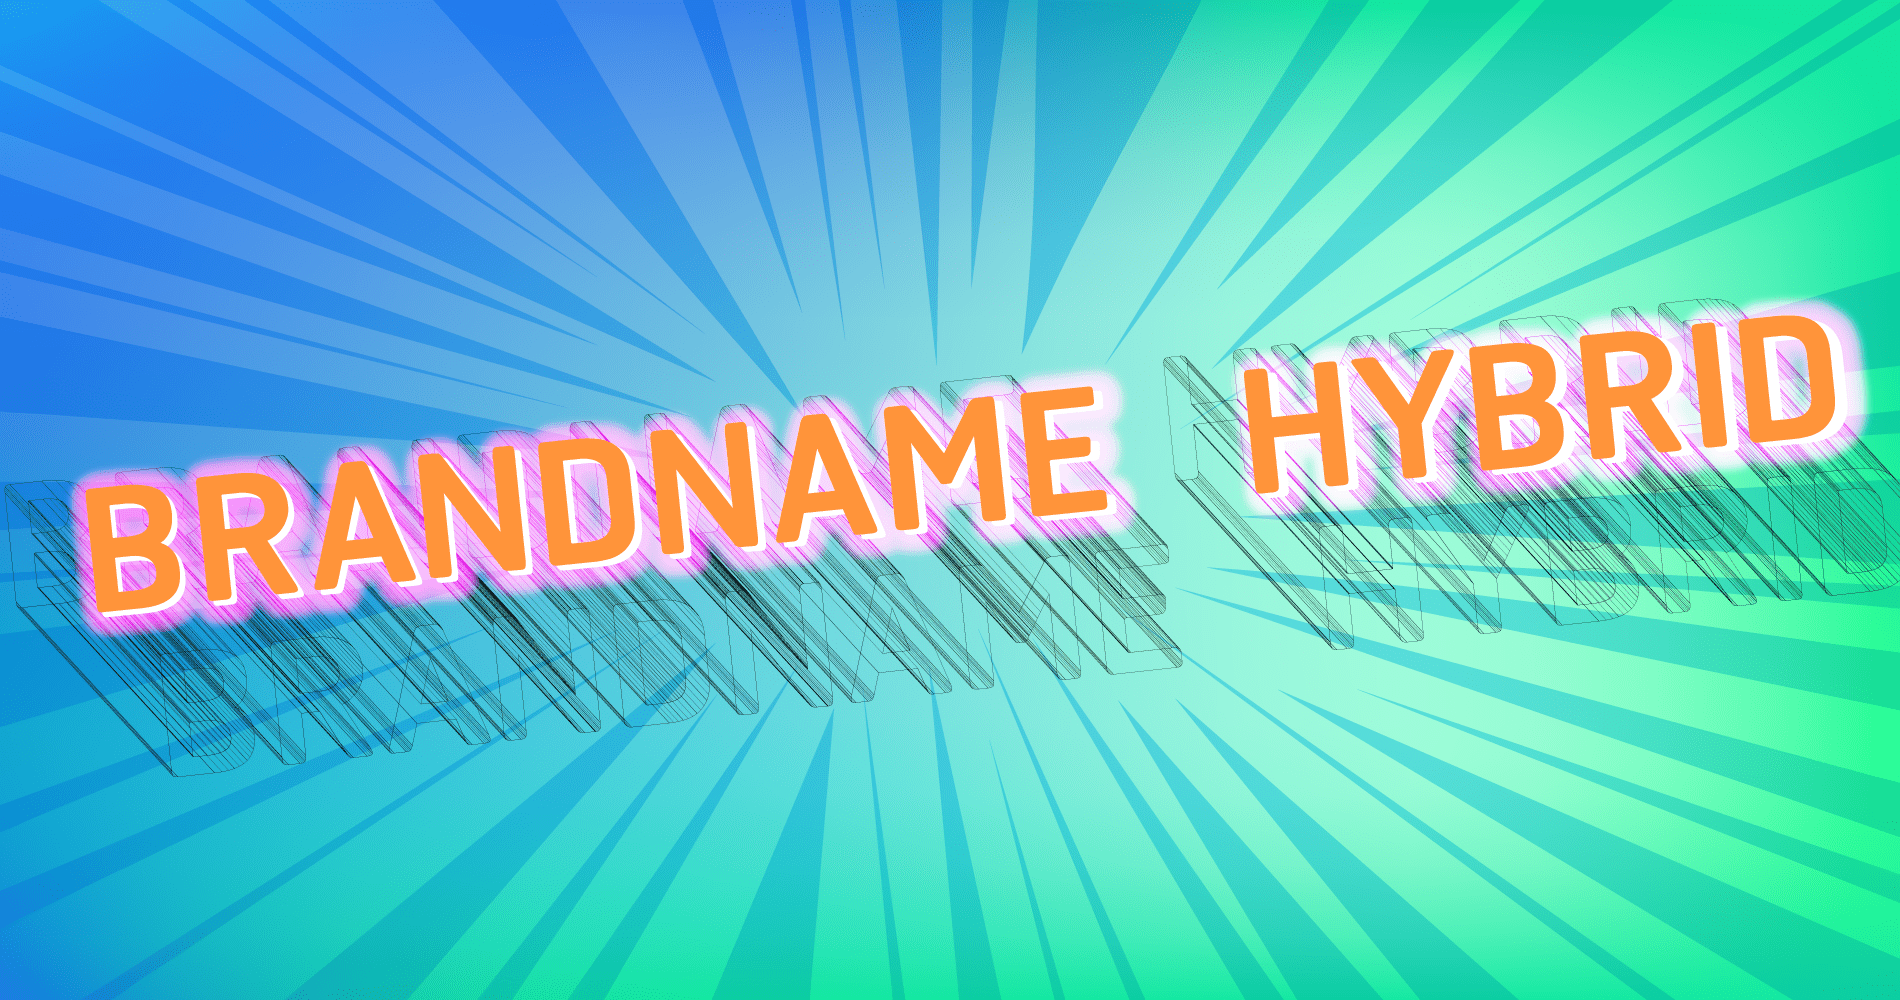 Brandname กับการ Hybrid ที่หลายคนคิดว่าไม่น่าจะเข้ากันได้